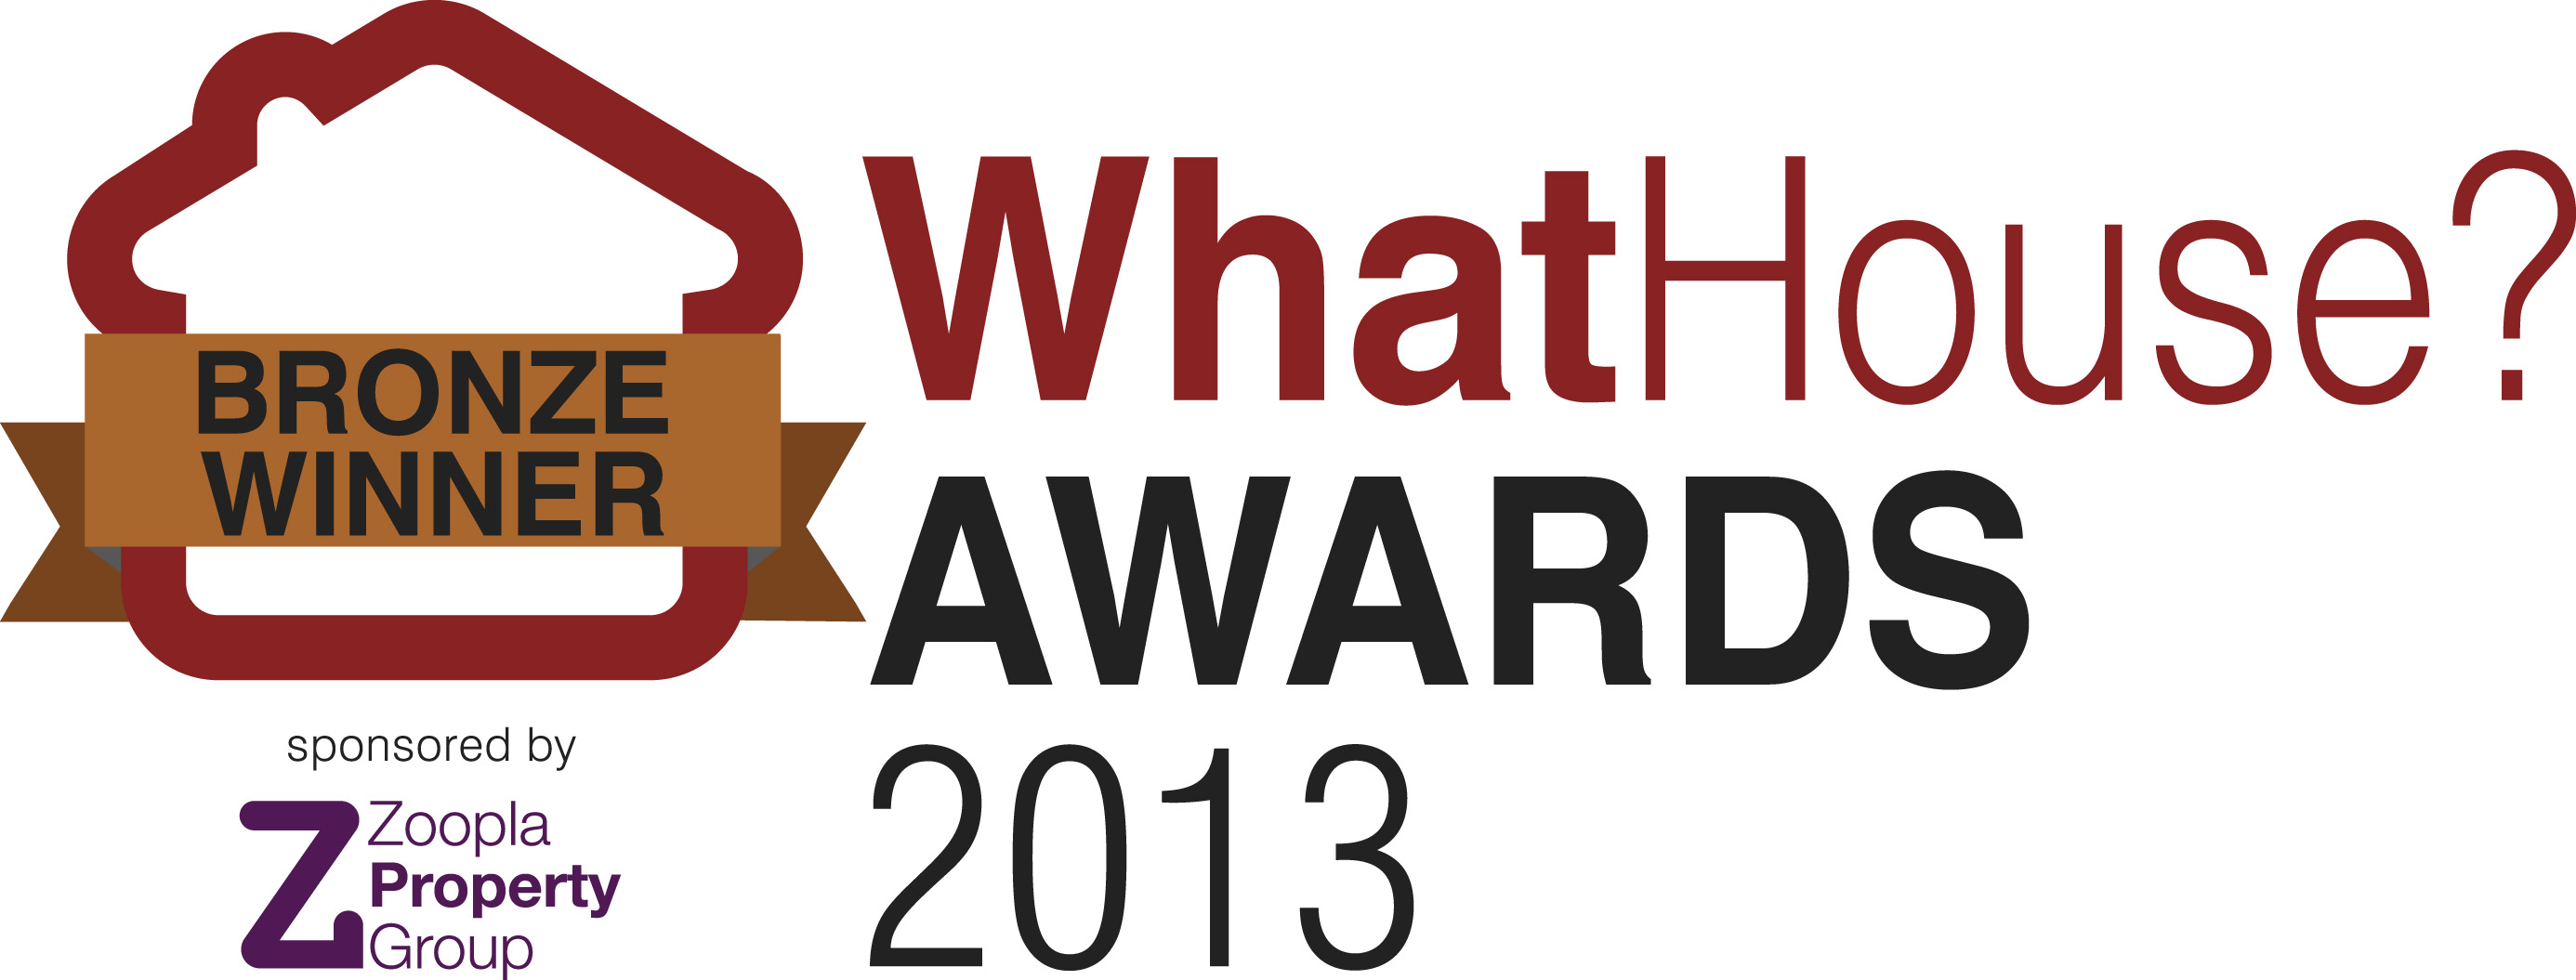 WhatHouse? Awards Winner Bronze 2013